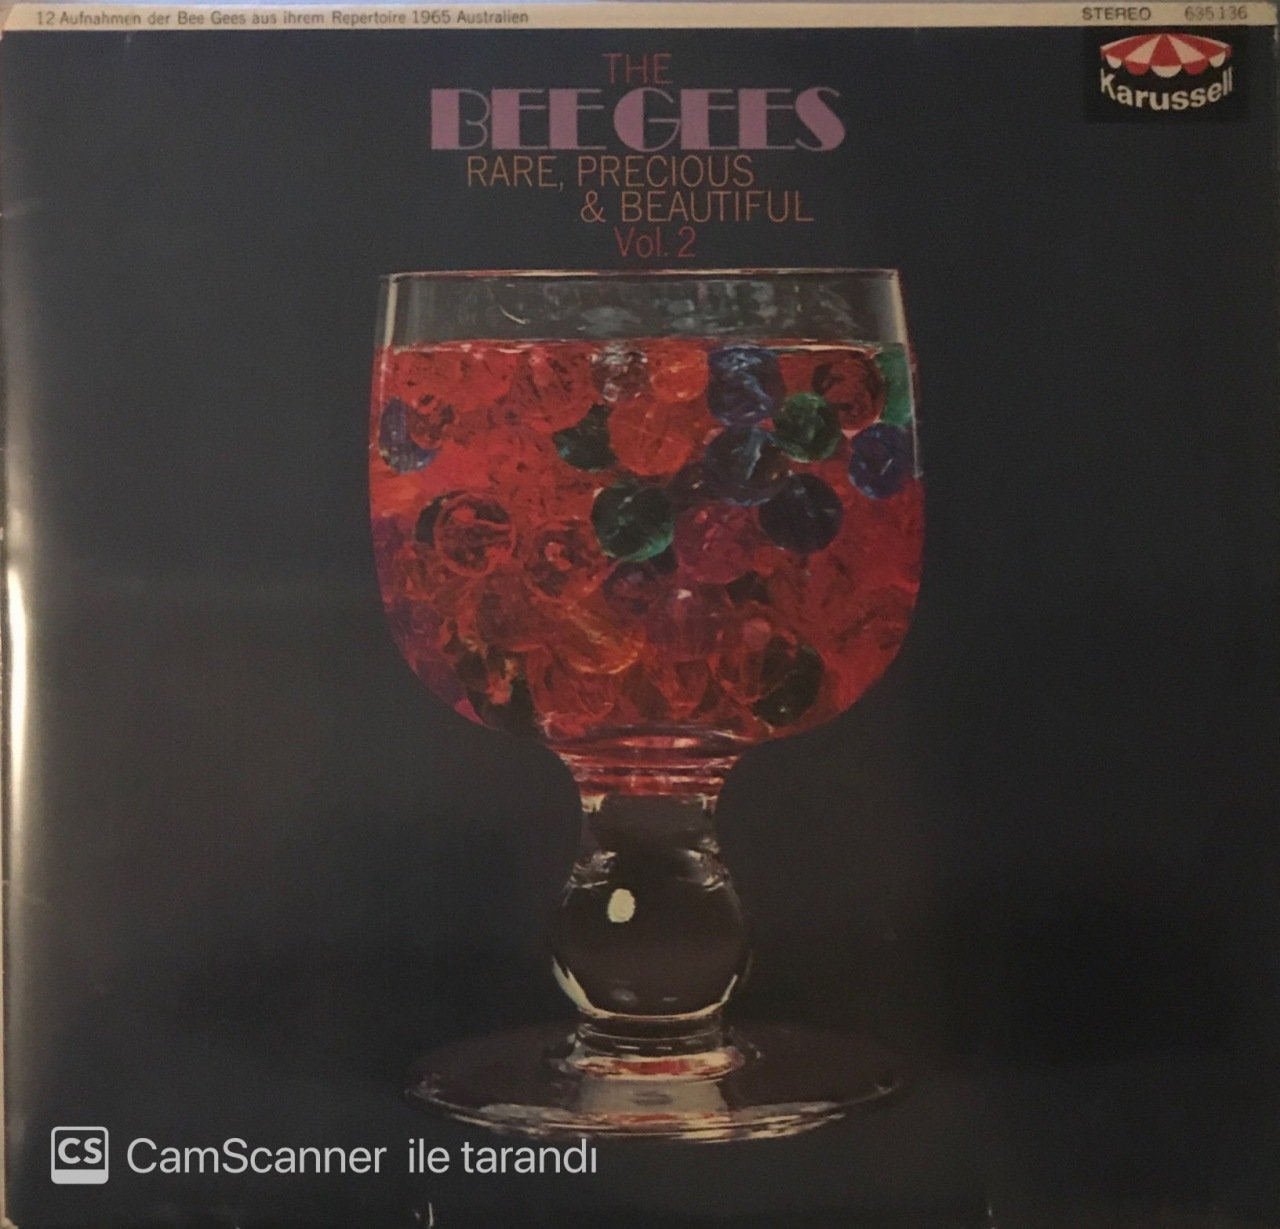 The Bee Gees Rare, Precious & Beautiful Vol. 2 LP